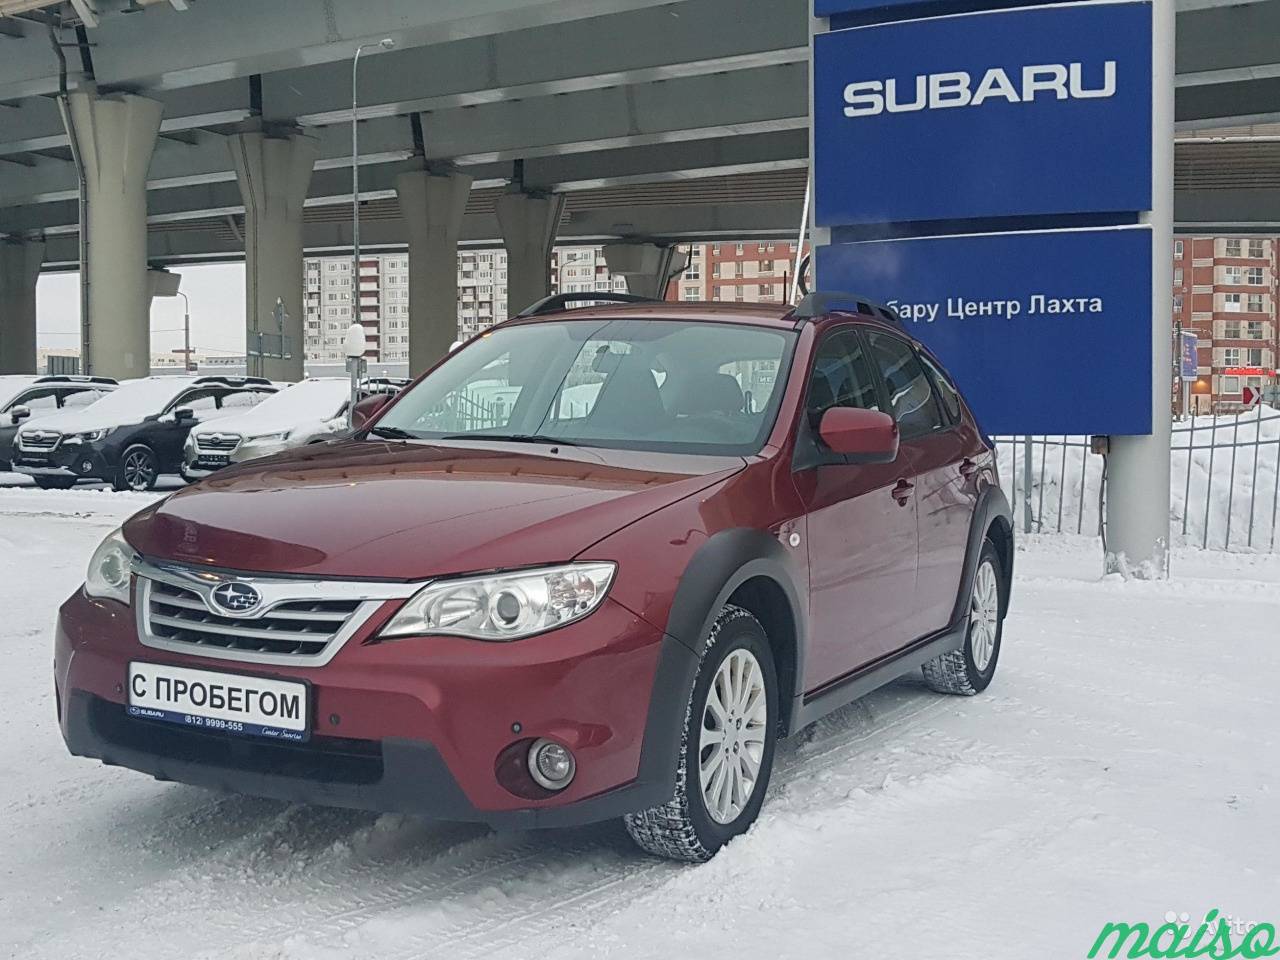 Subaru Impreza 2.0 AT, 2010, хетчбэк в Санкт-Петербурге. Фото 3